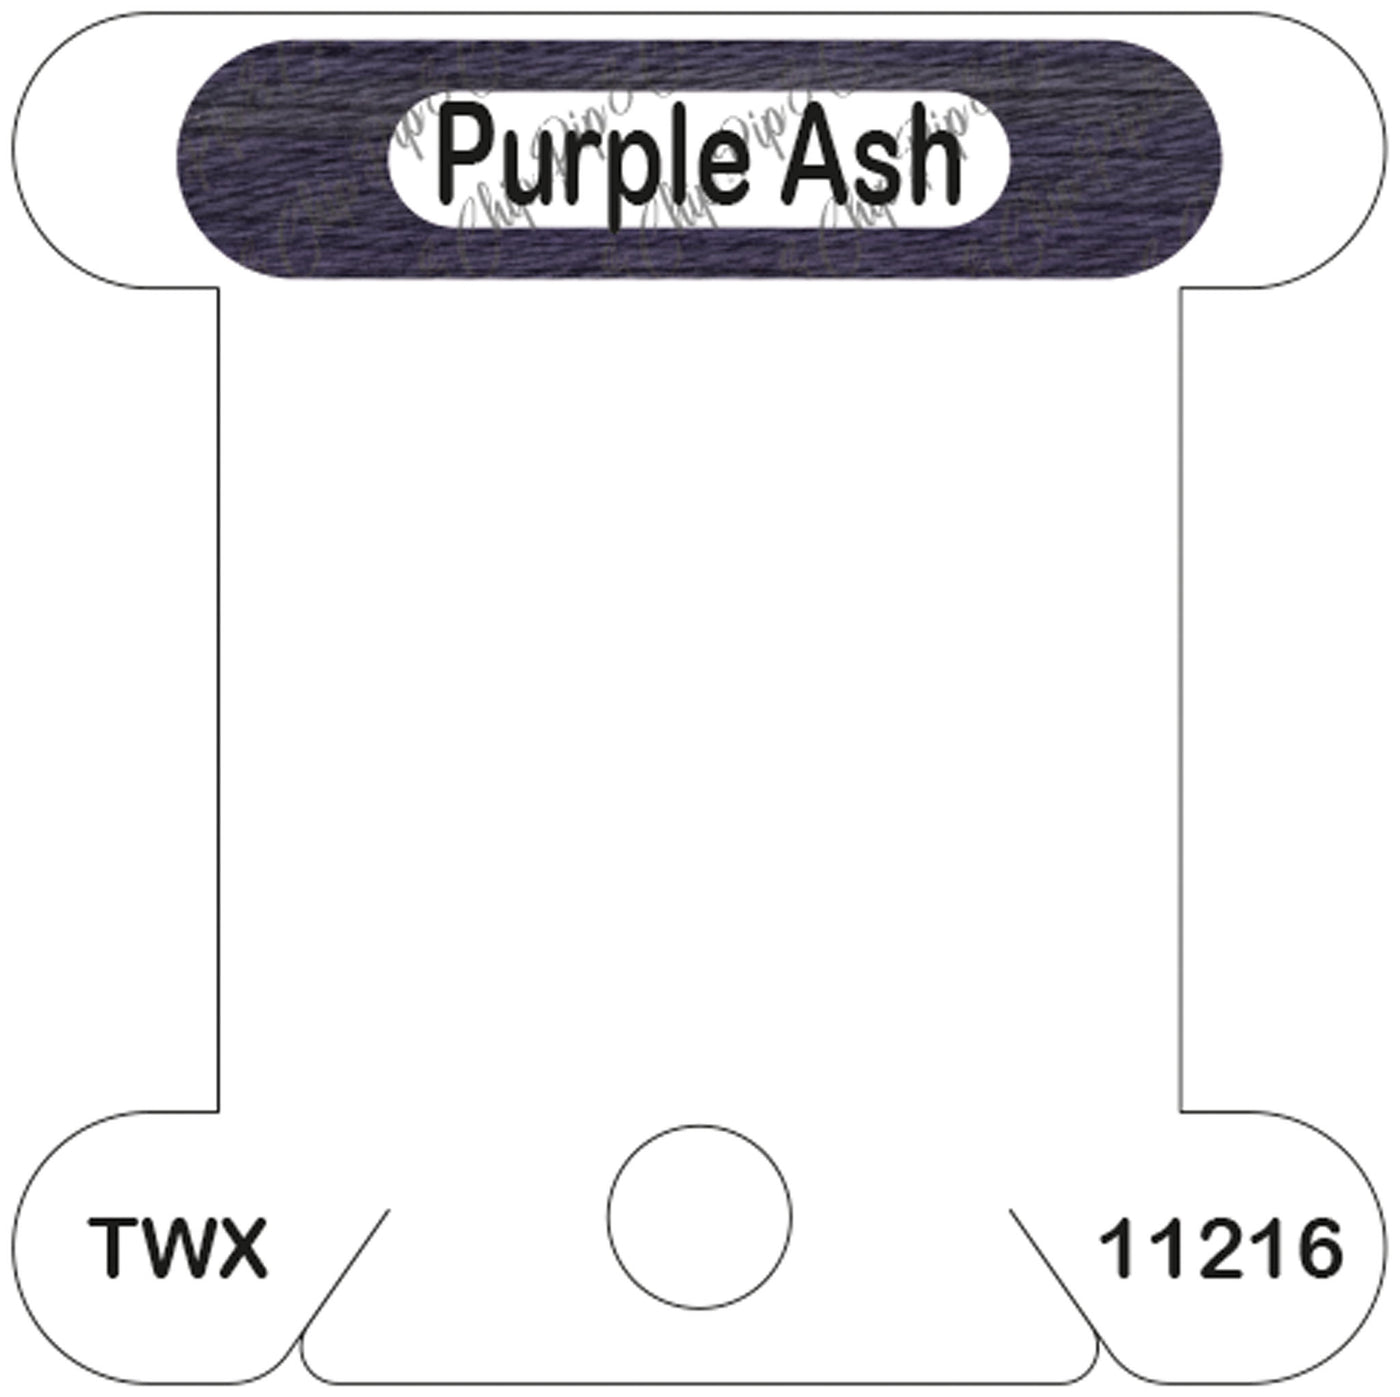 ThreadworX Purple Ash acrylic bobbin